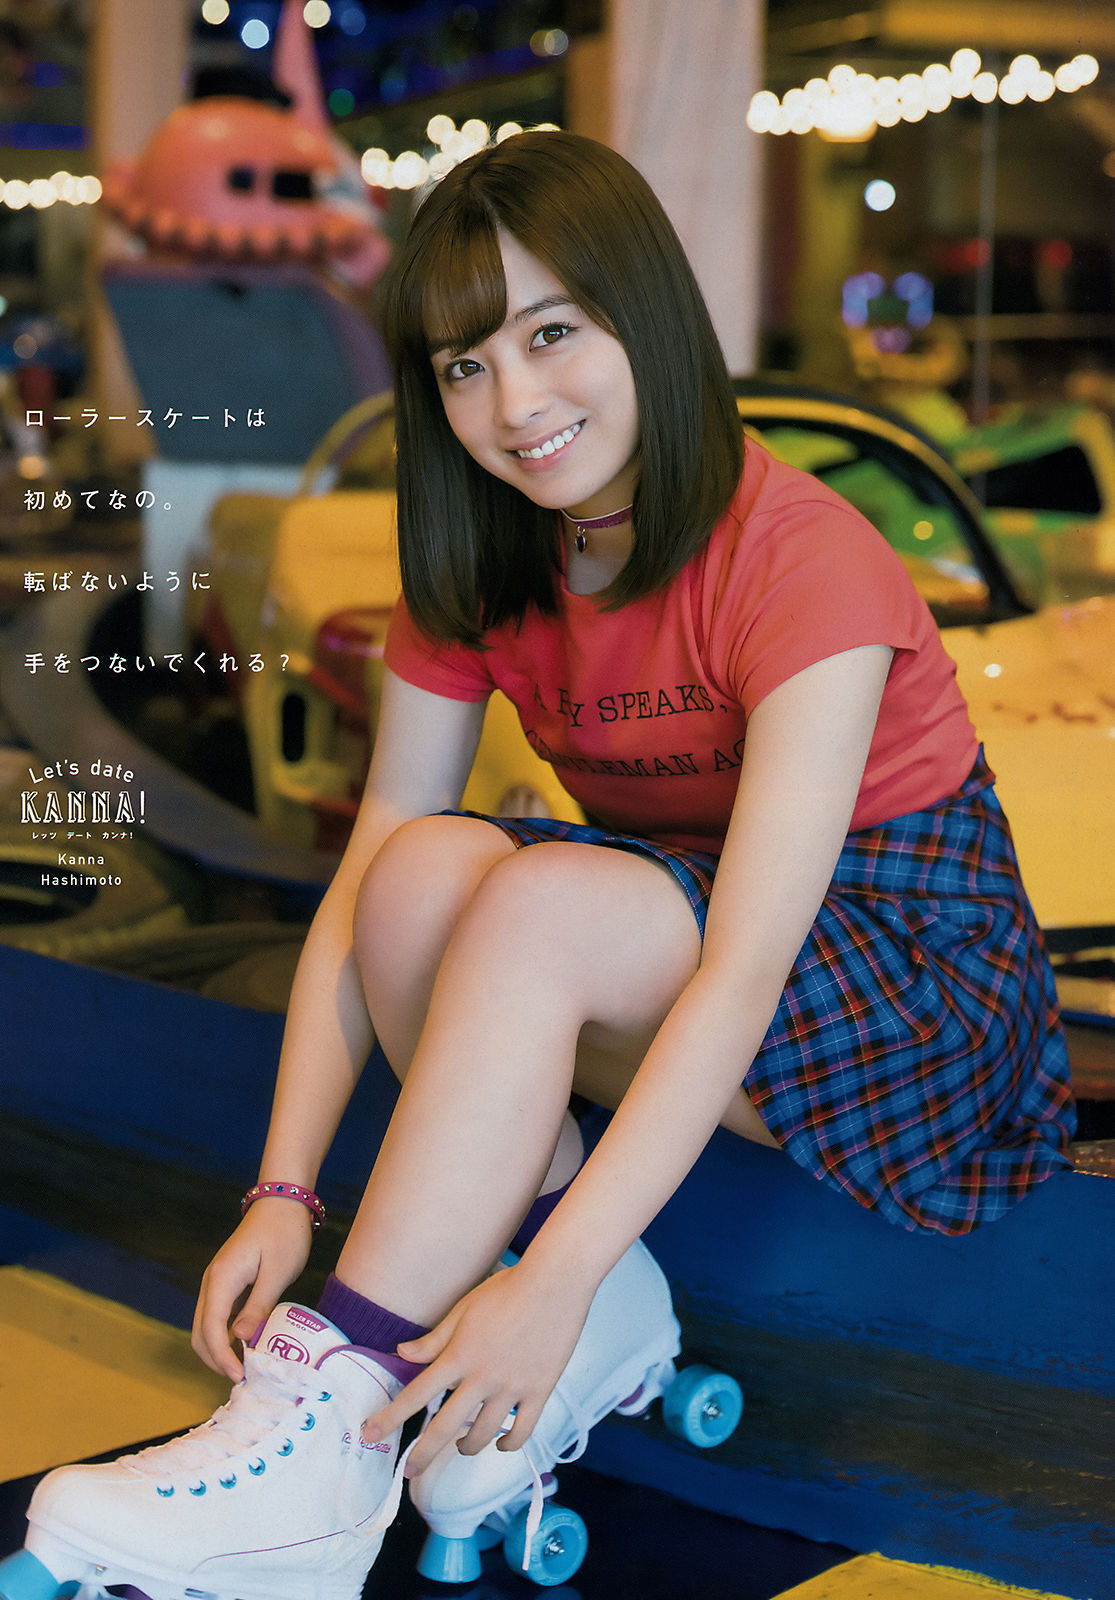 [Young Magazine] 2018年No.18 橋本環奈 Kanna Hashimoto